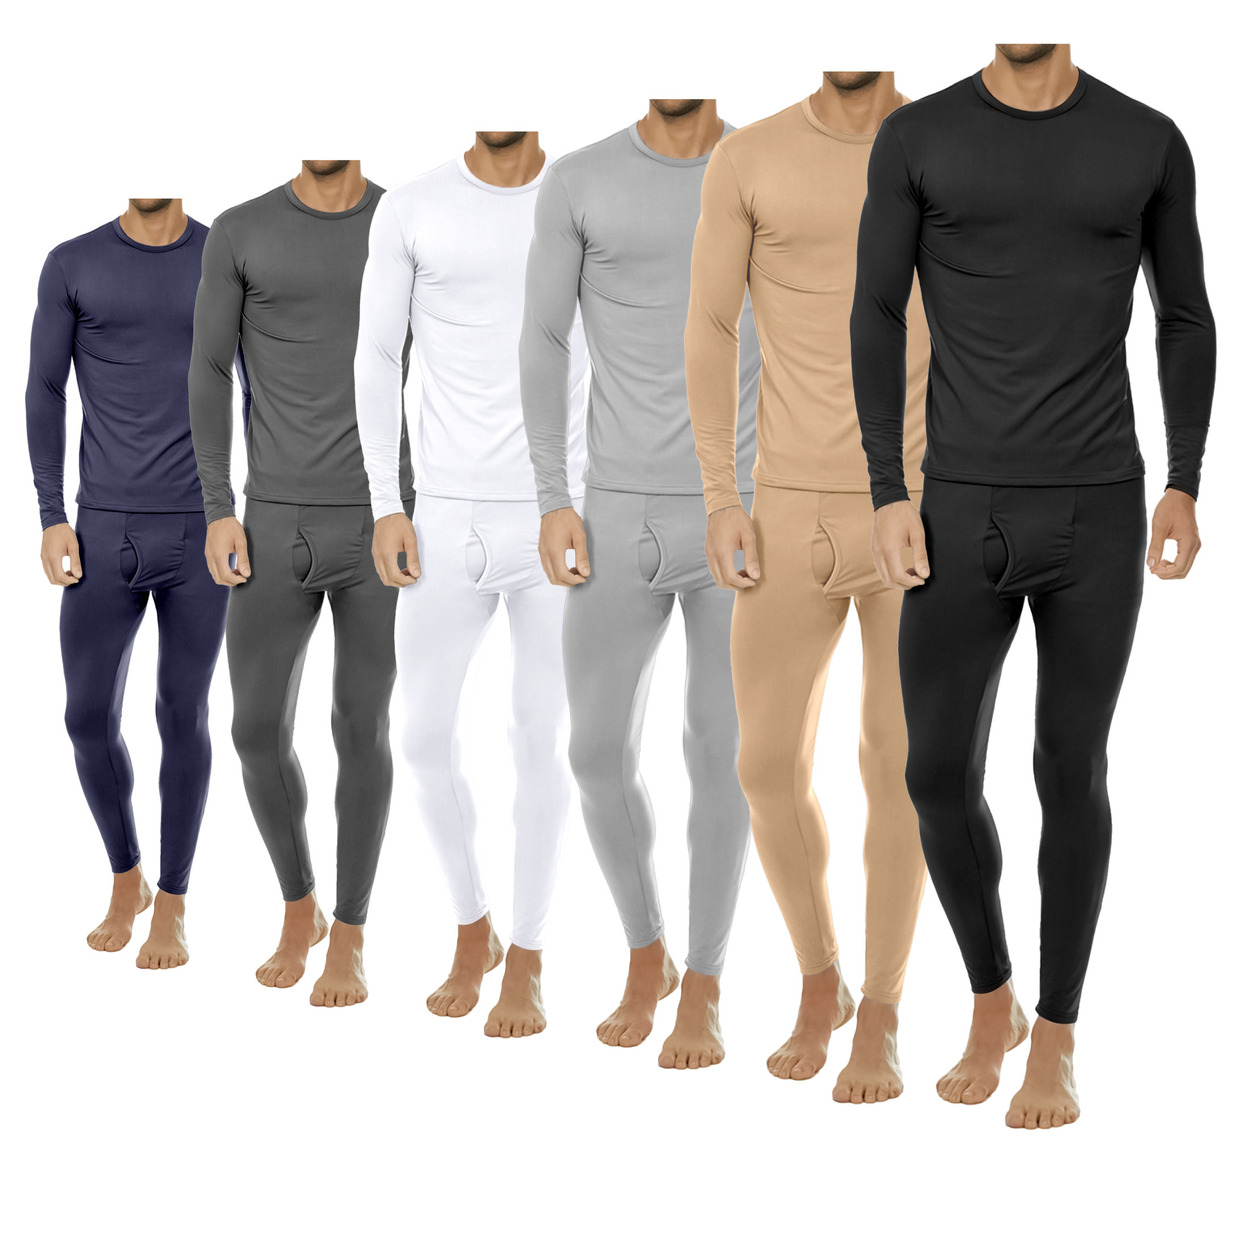 2-Sets: Men's Winter Warm Fleece Lined Thermal Underwear Set For Cold Weather - Black&black, Xx-large